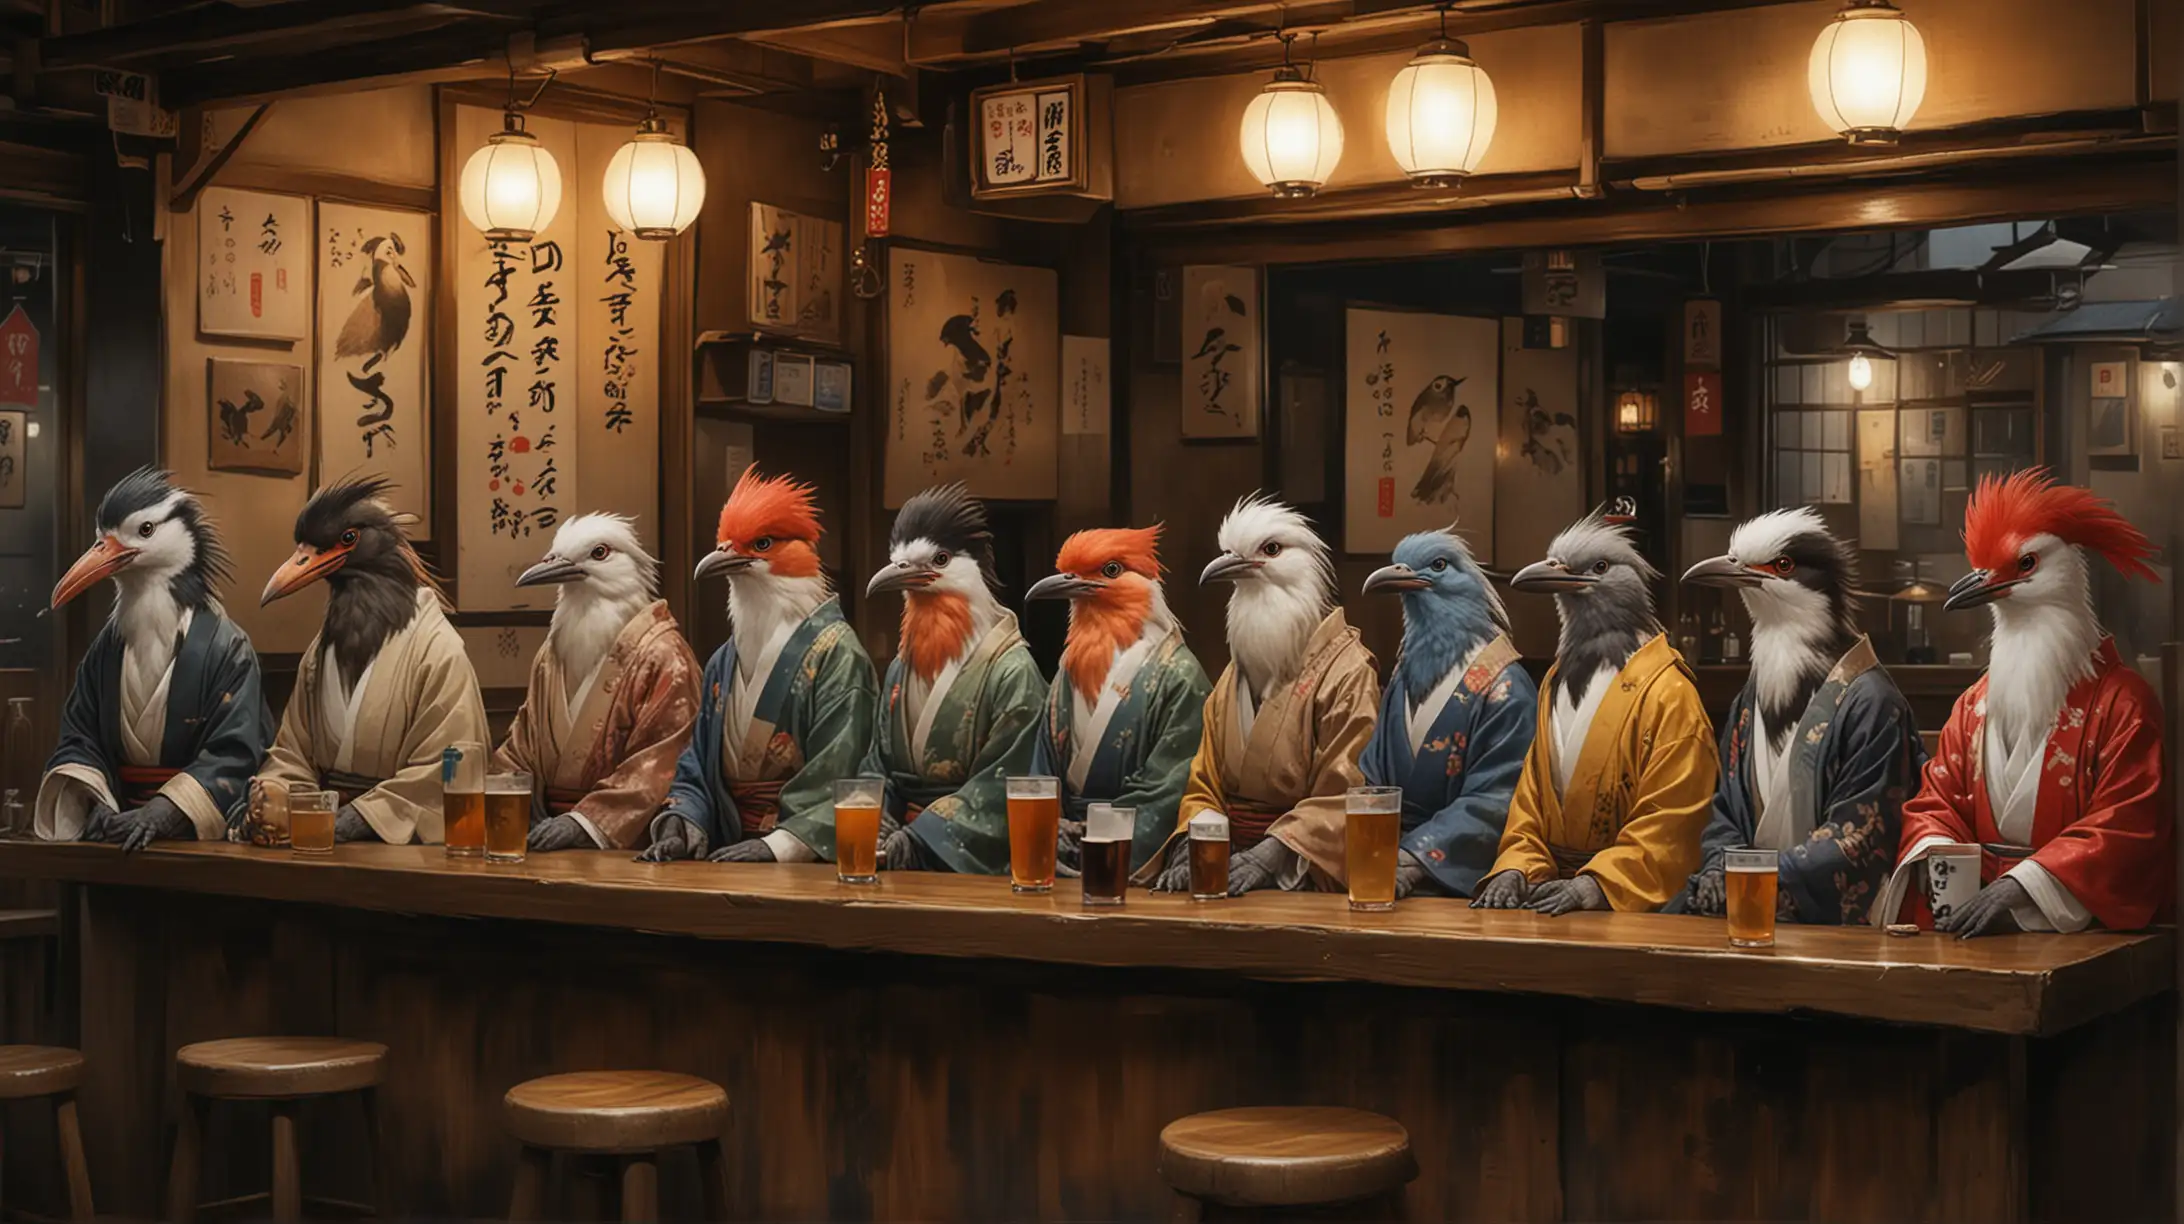 Anthropomorphic Birds in Traditional Japanese Izakaya Bar Painting